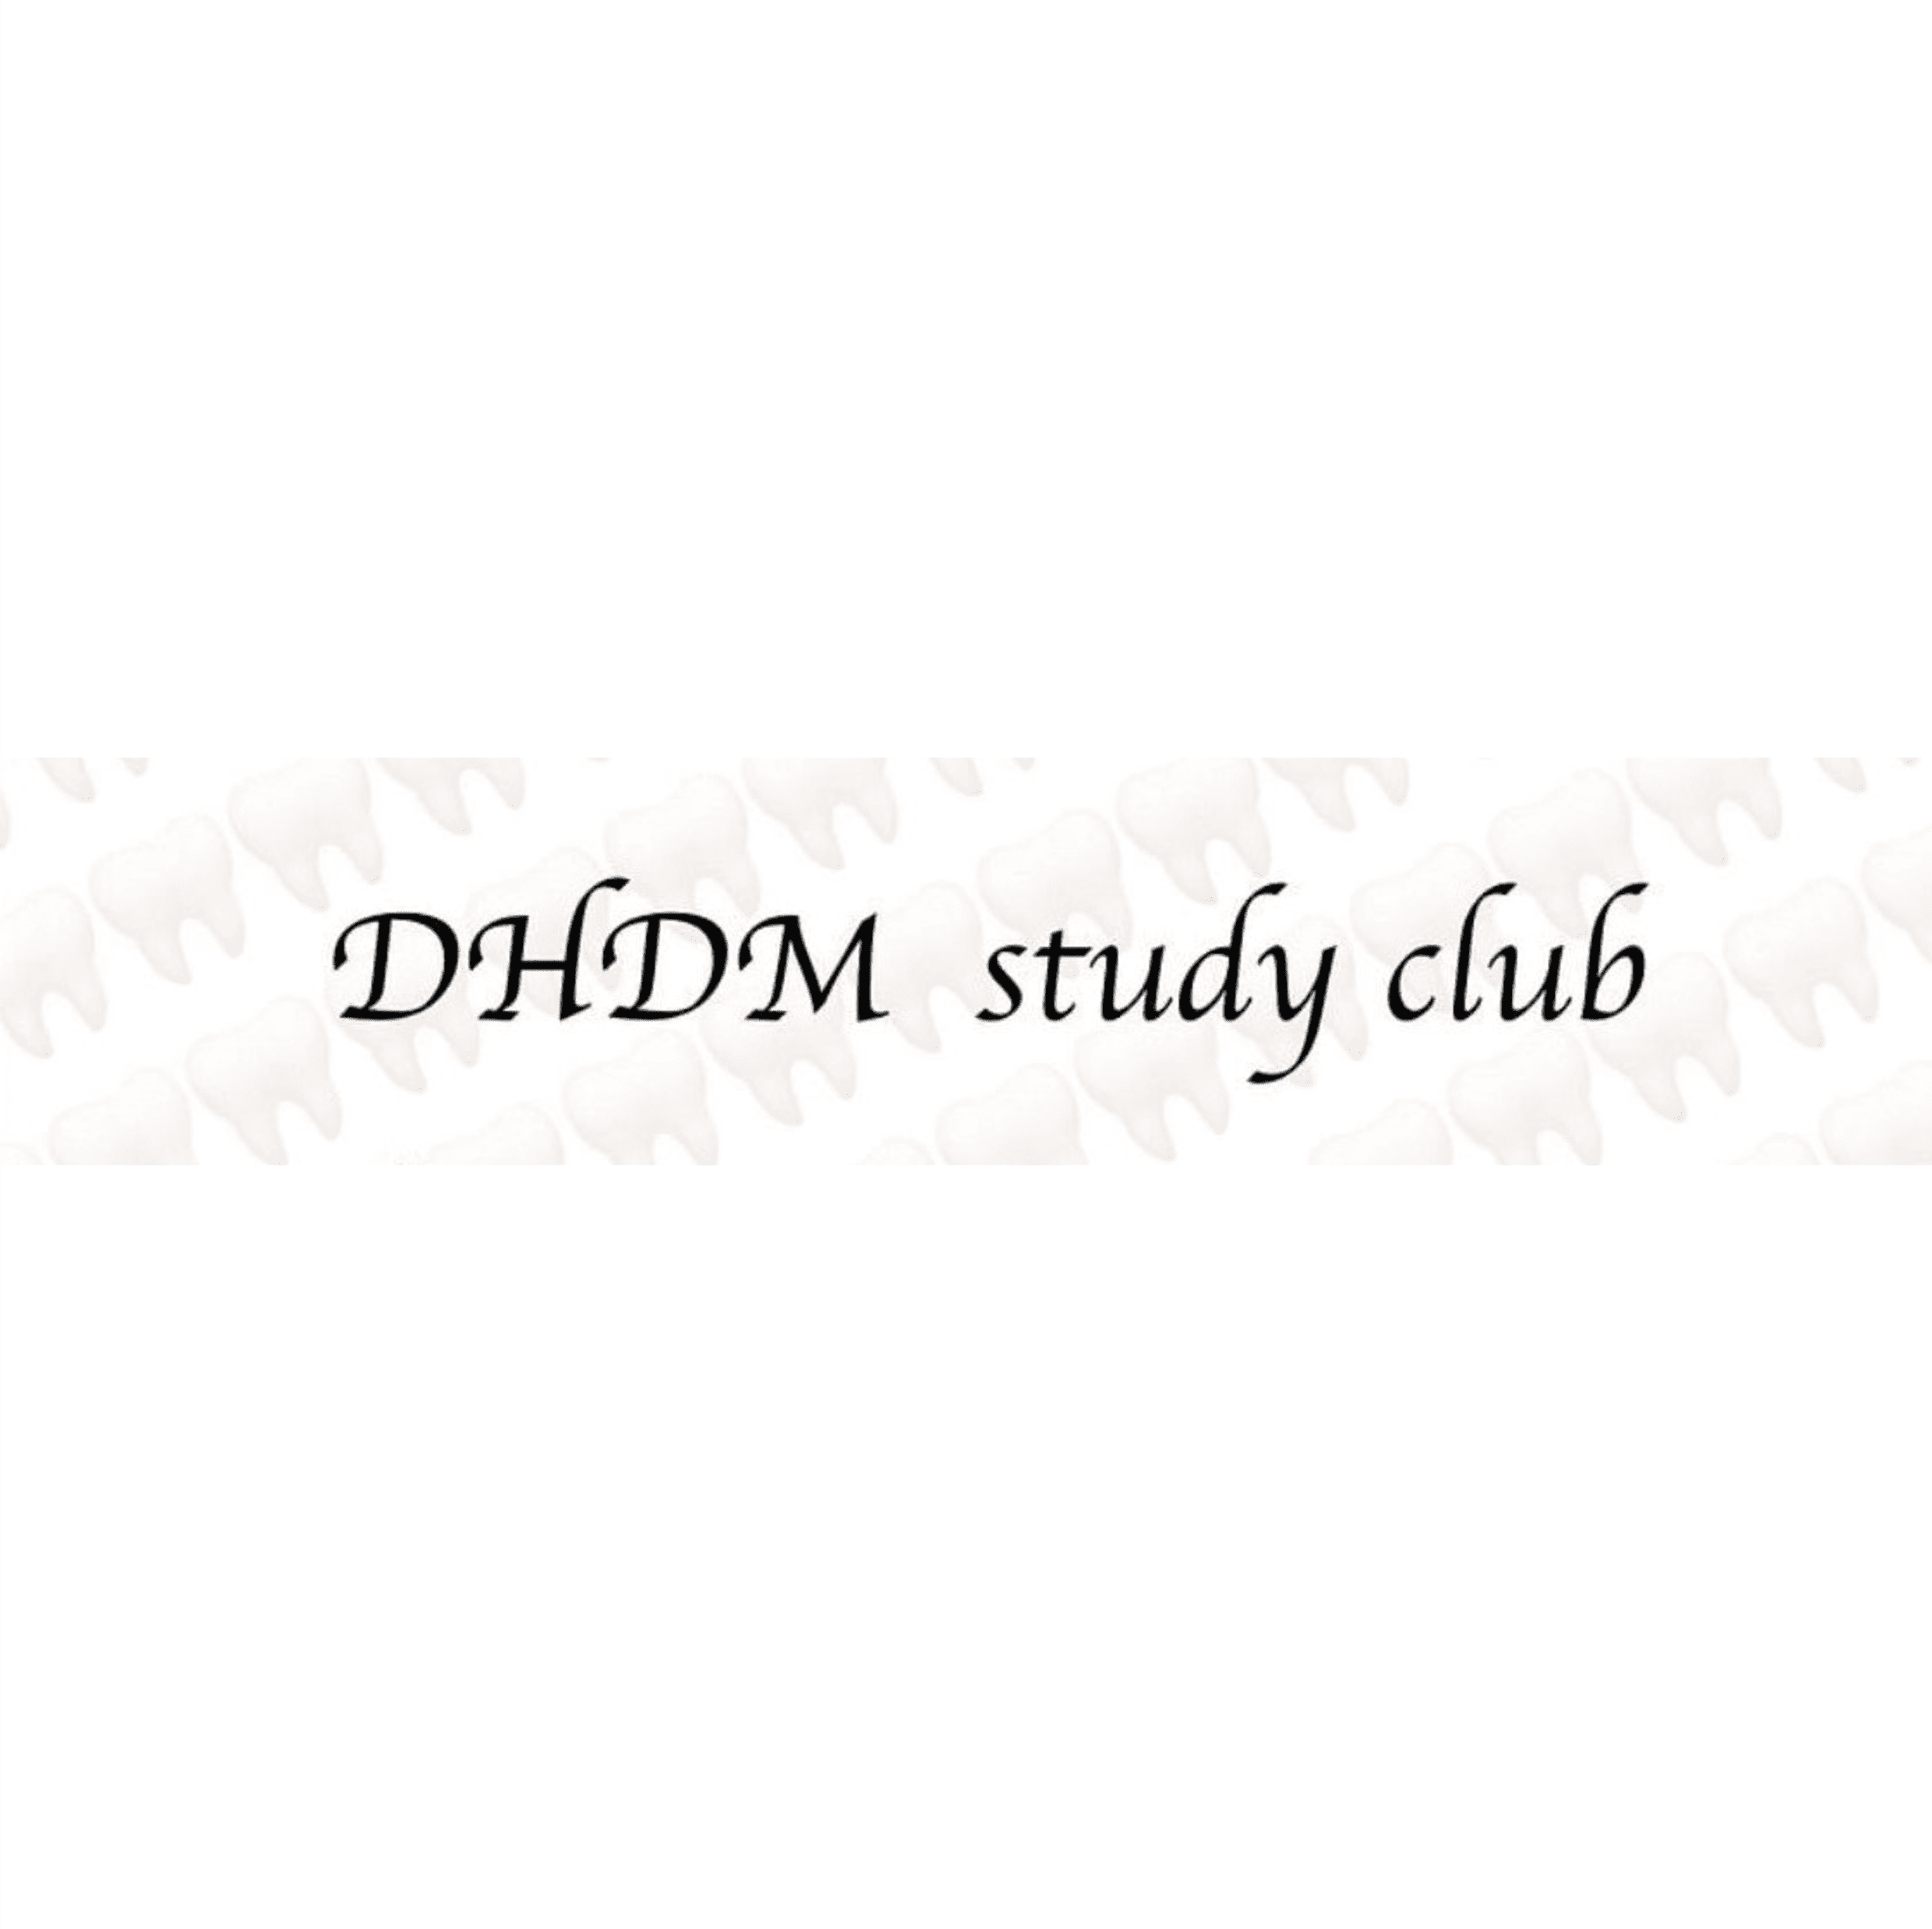 DHDM study club